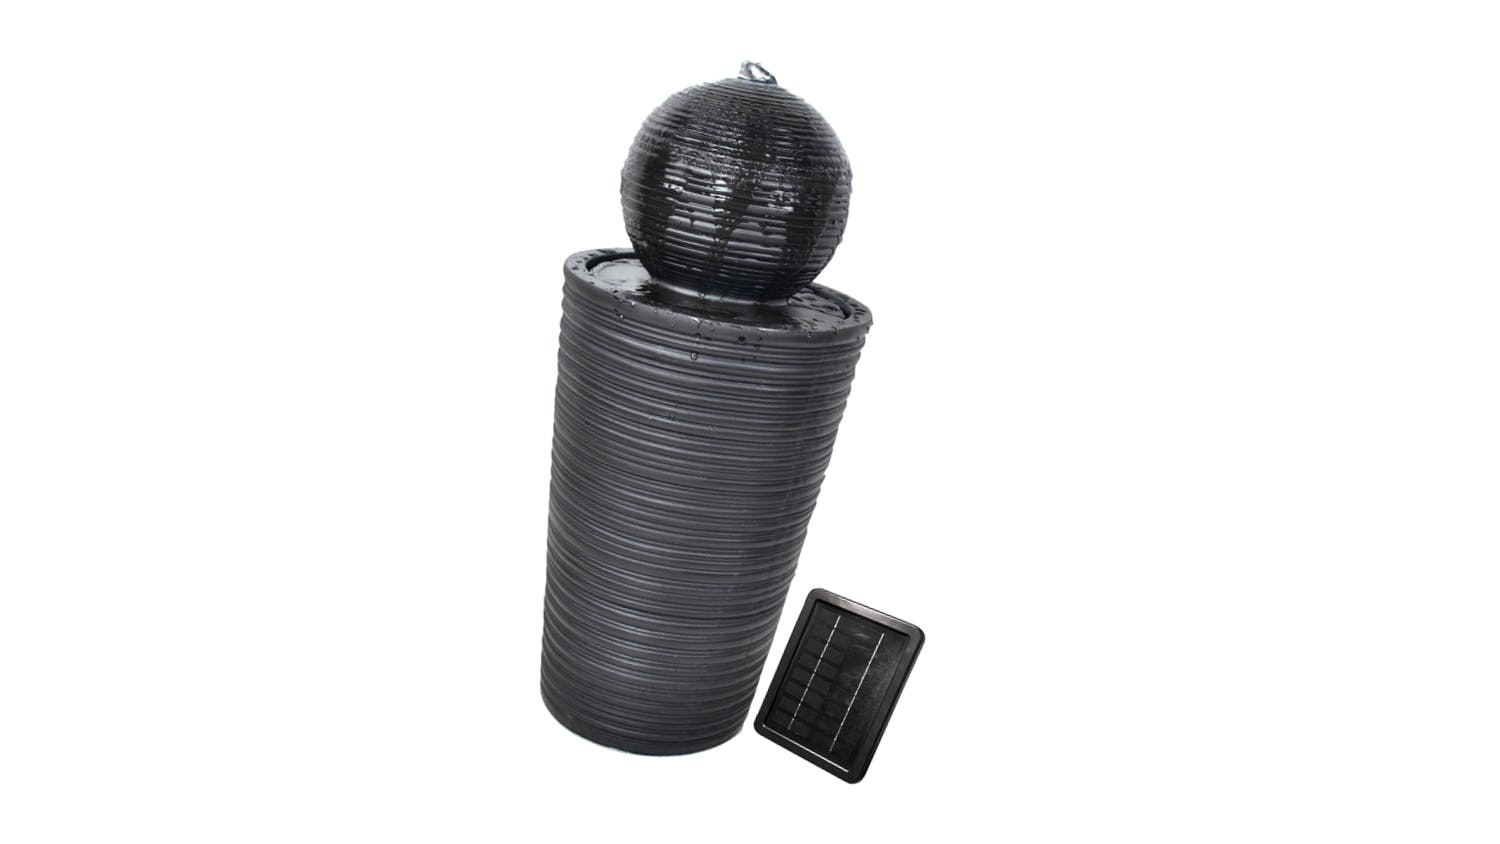 Solar Water Feature Ball Pedestal 28 x 28 x 59cm - Black